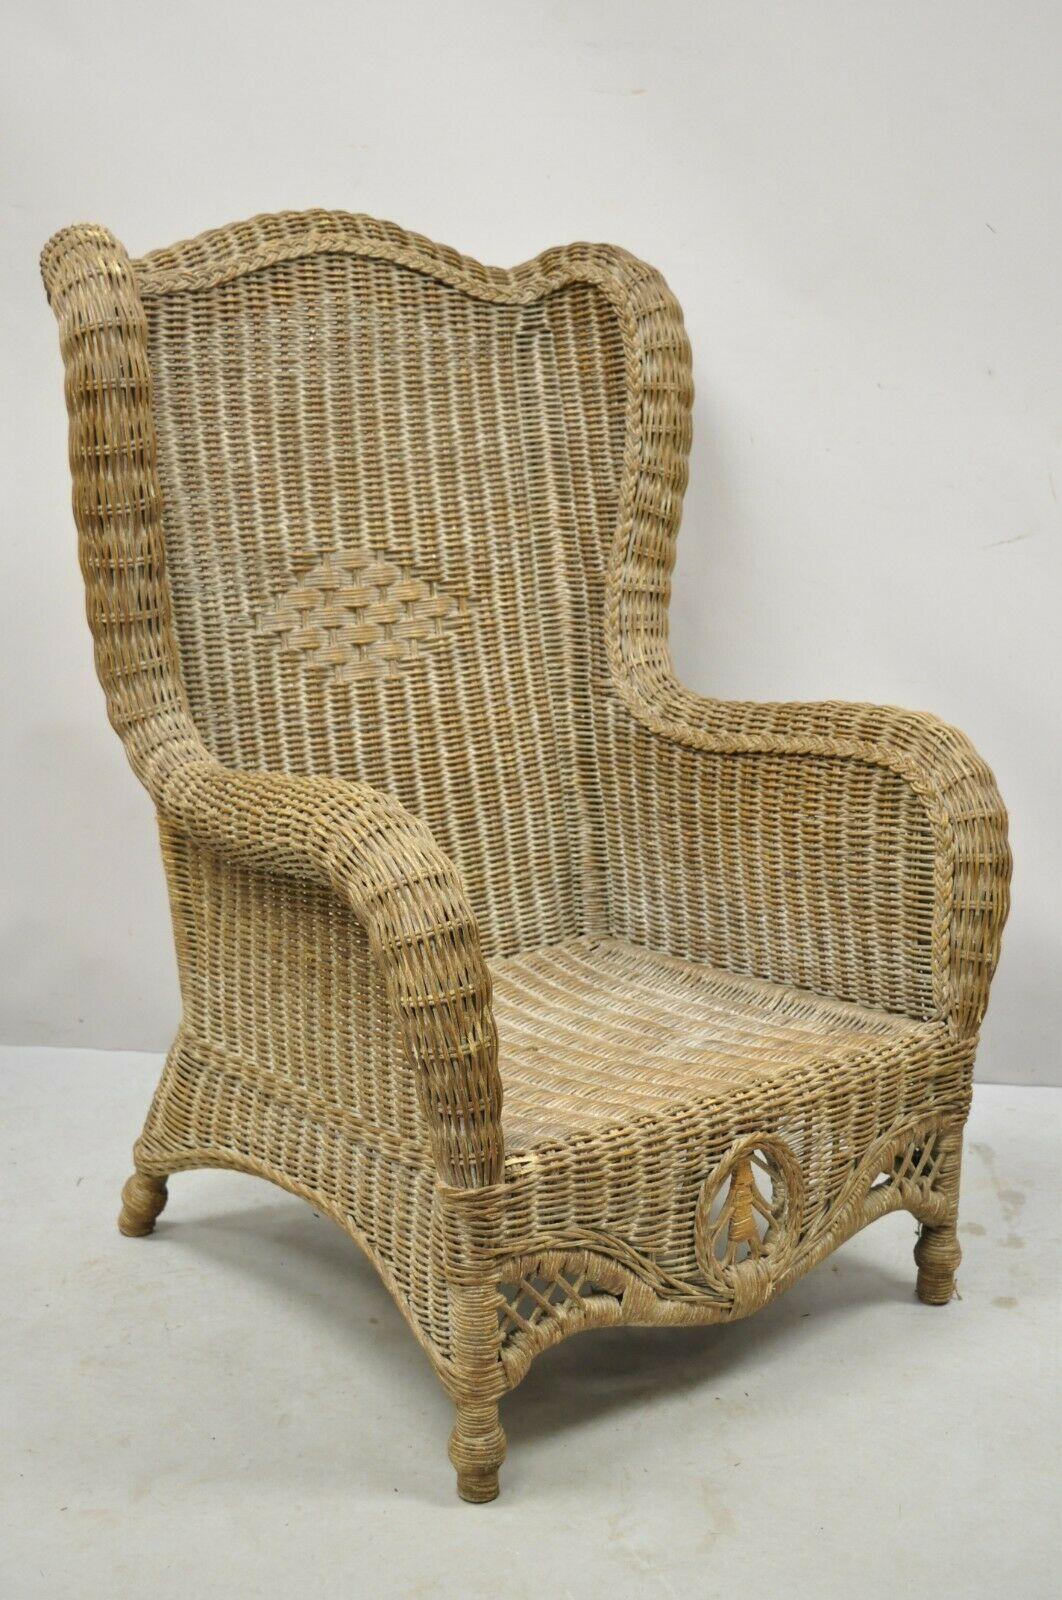 Große geflochtene Rattan Rattan viktorianischen Stil Wingback Lounge Sessel im Angebot 2